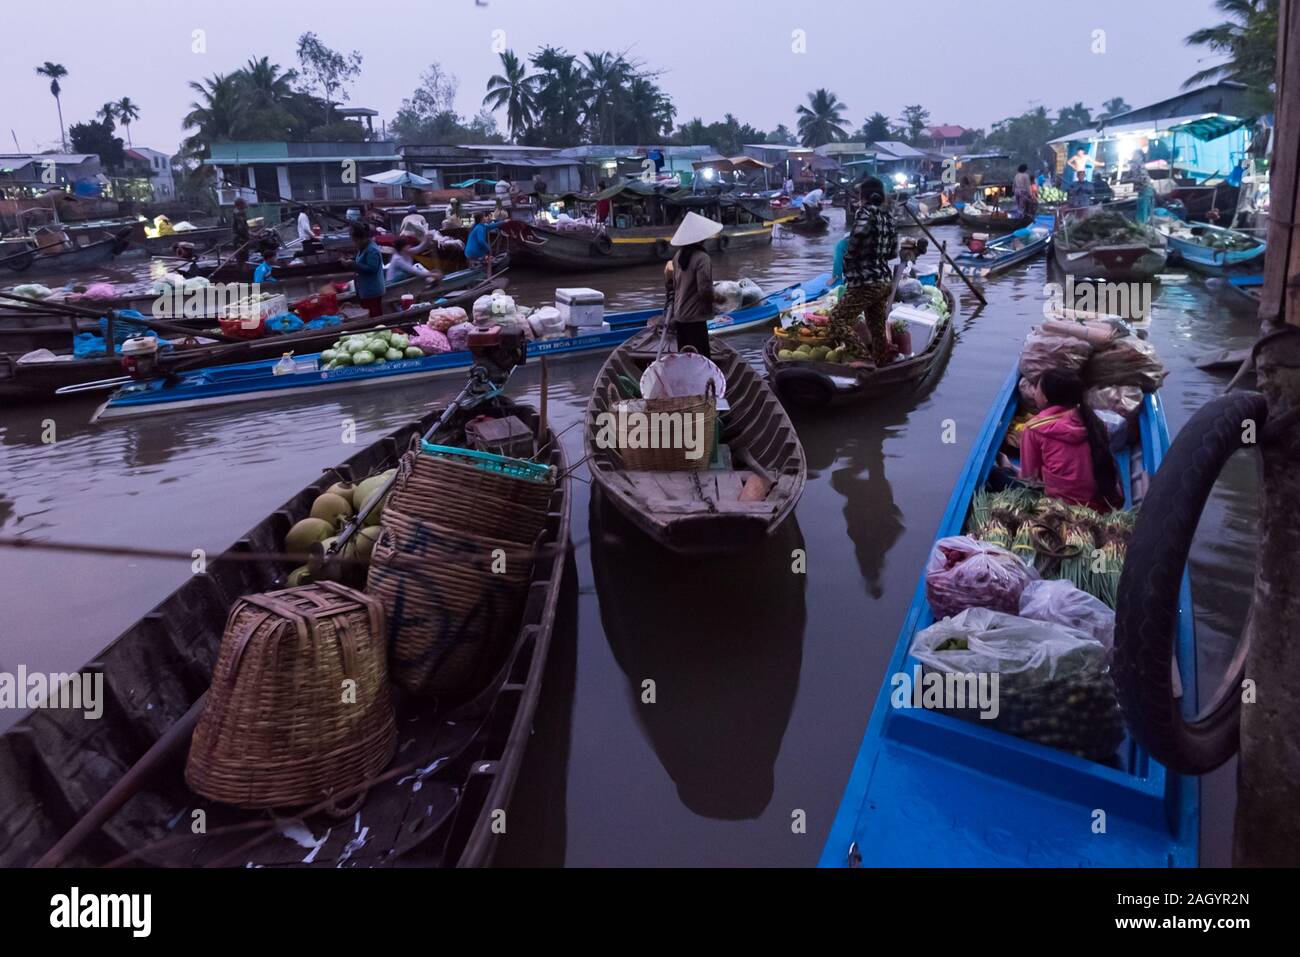 CAN Tho, Viet Nam. Feb 11, 2018. Phong Dien mercato galleggiante molto famoso nel delta del Mekong Foto Stock